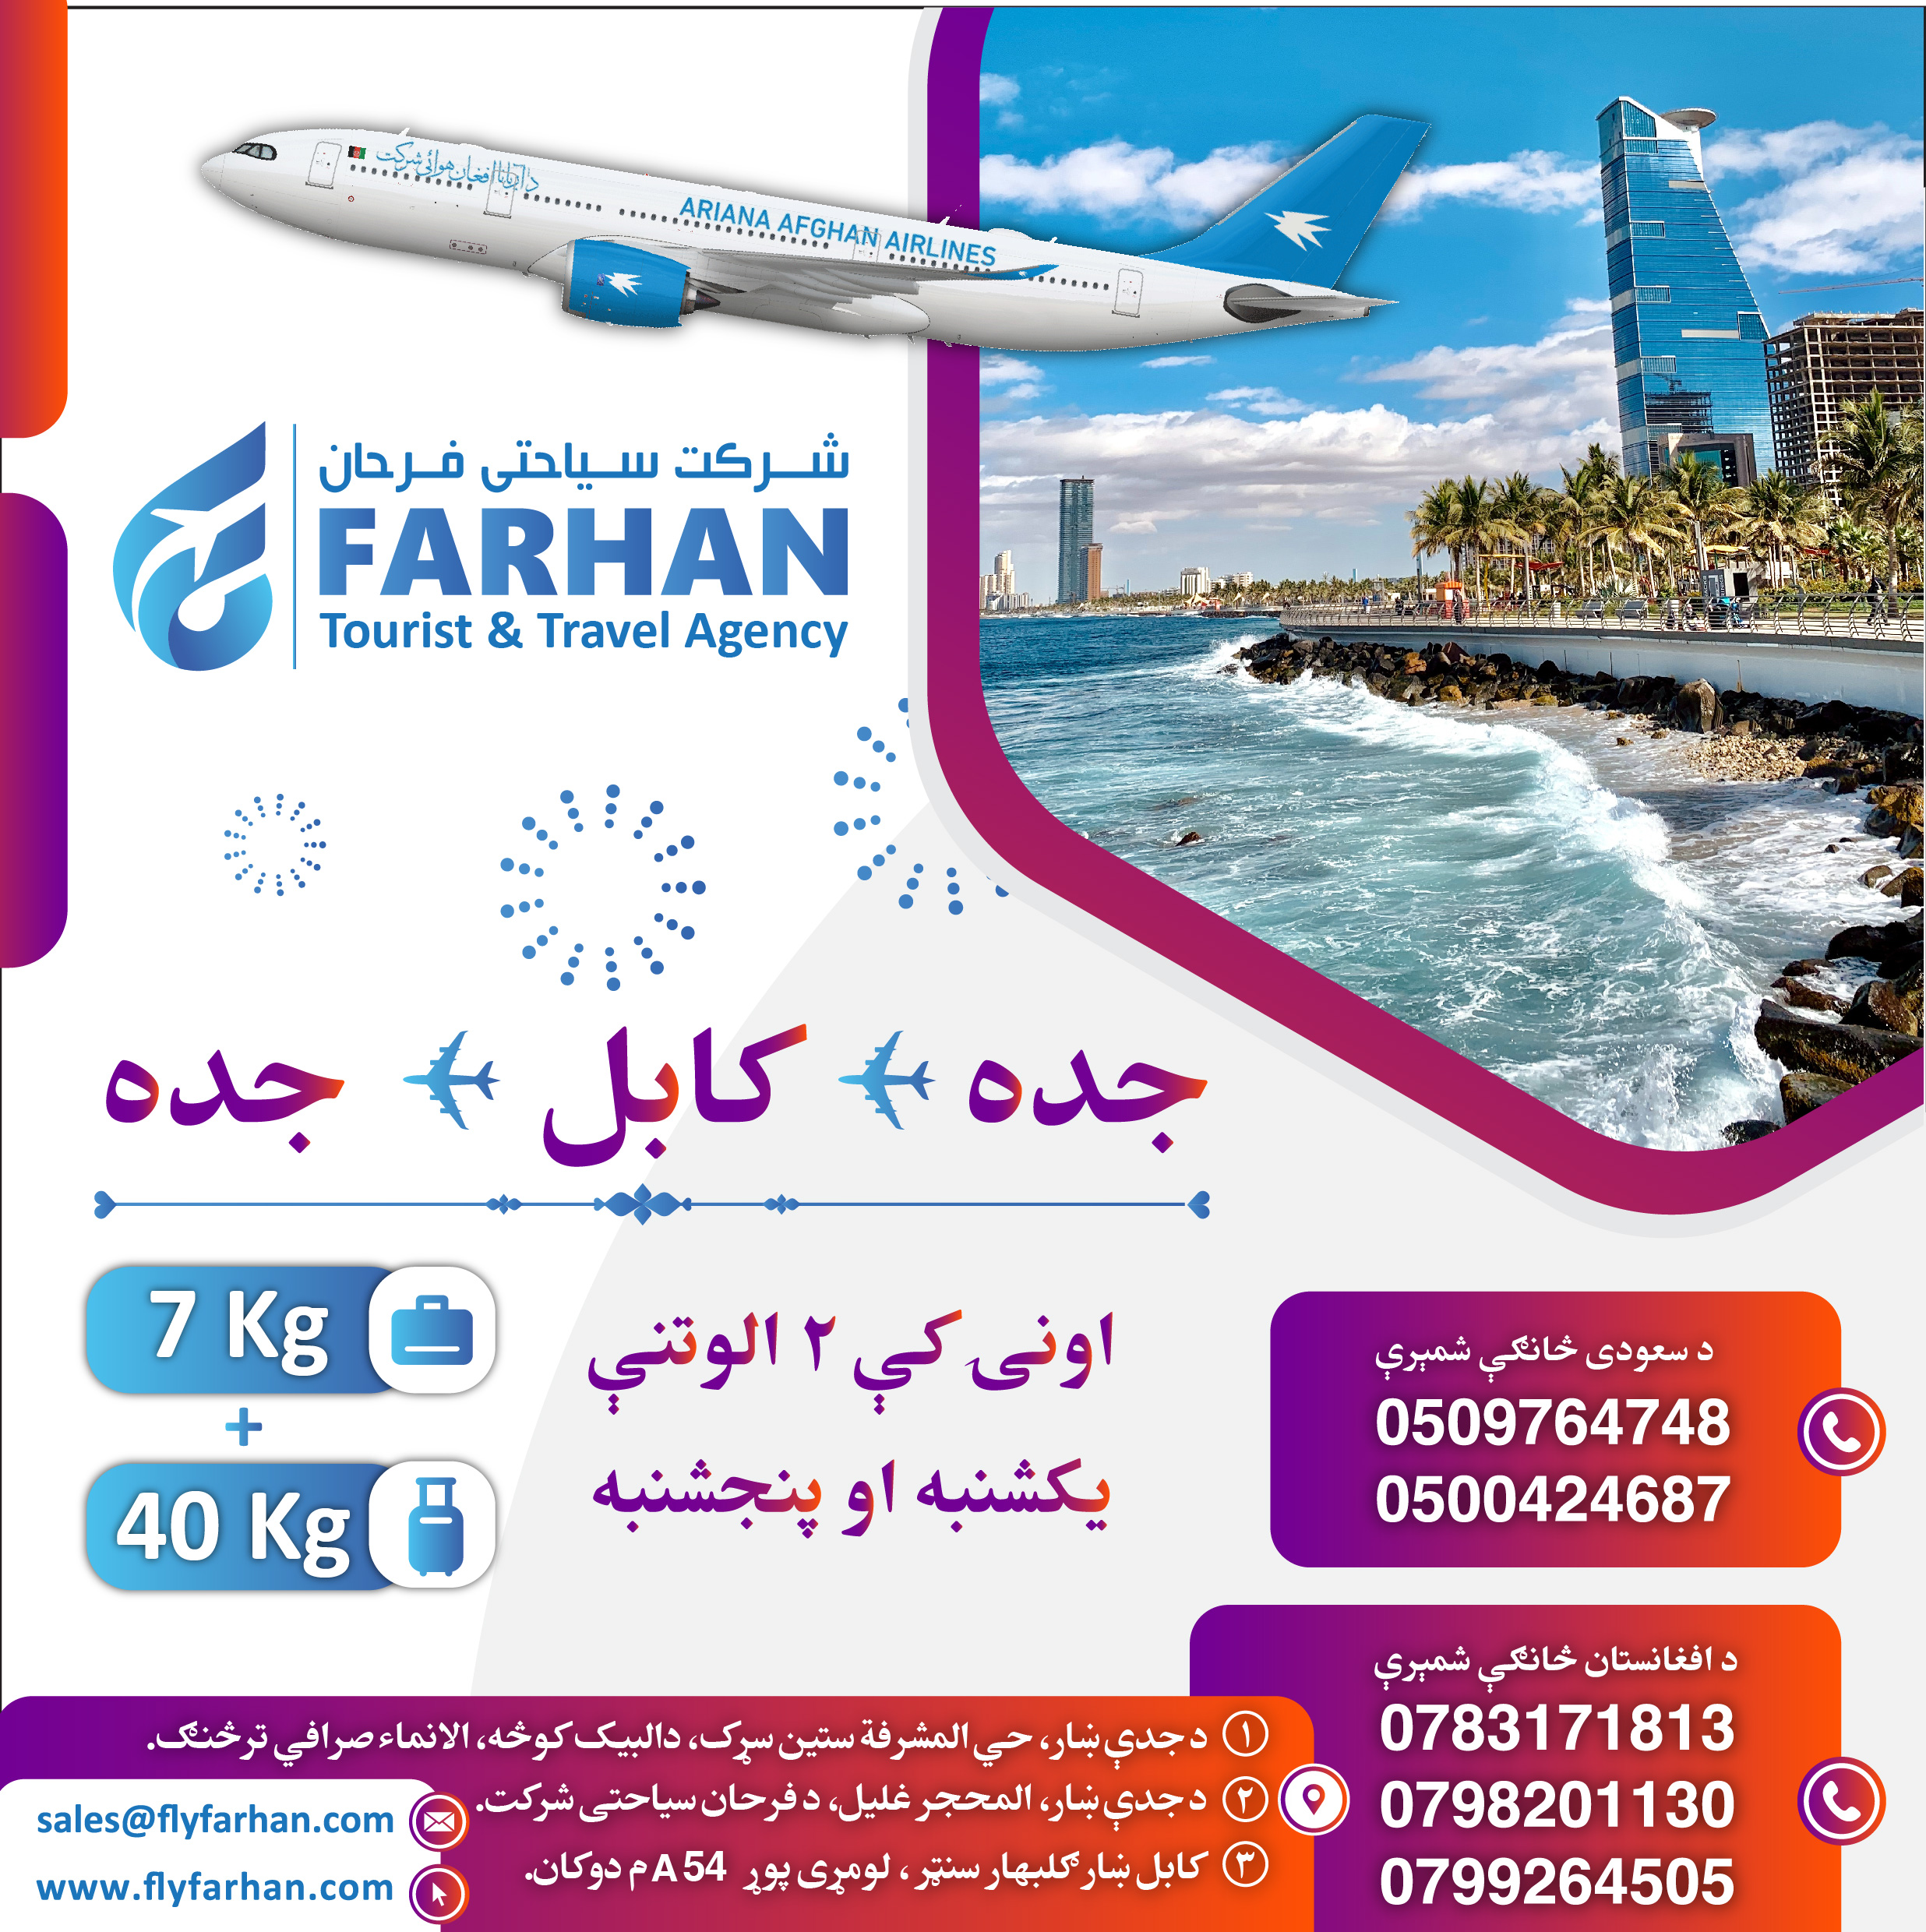 farhan travel